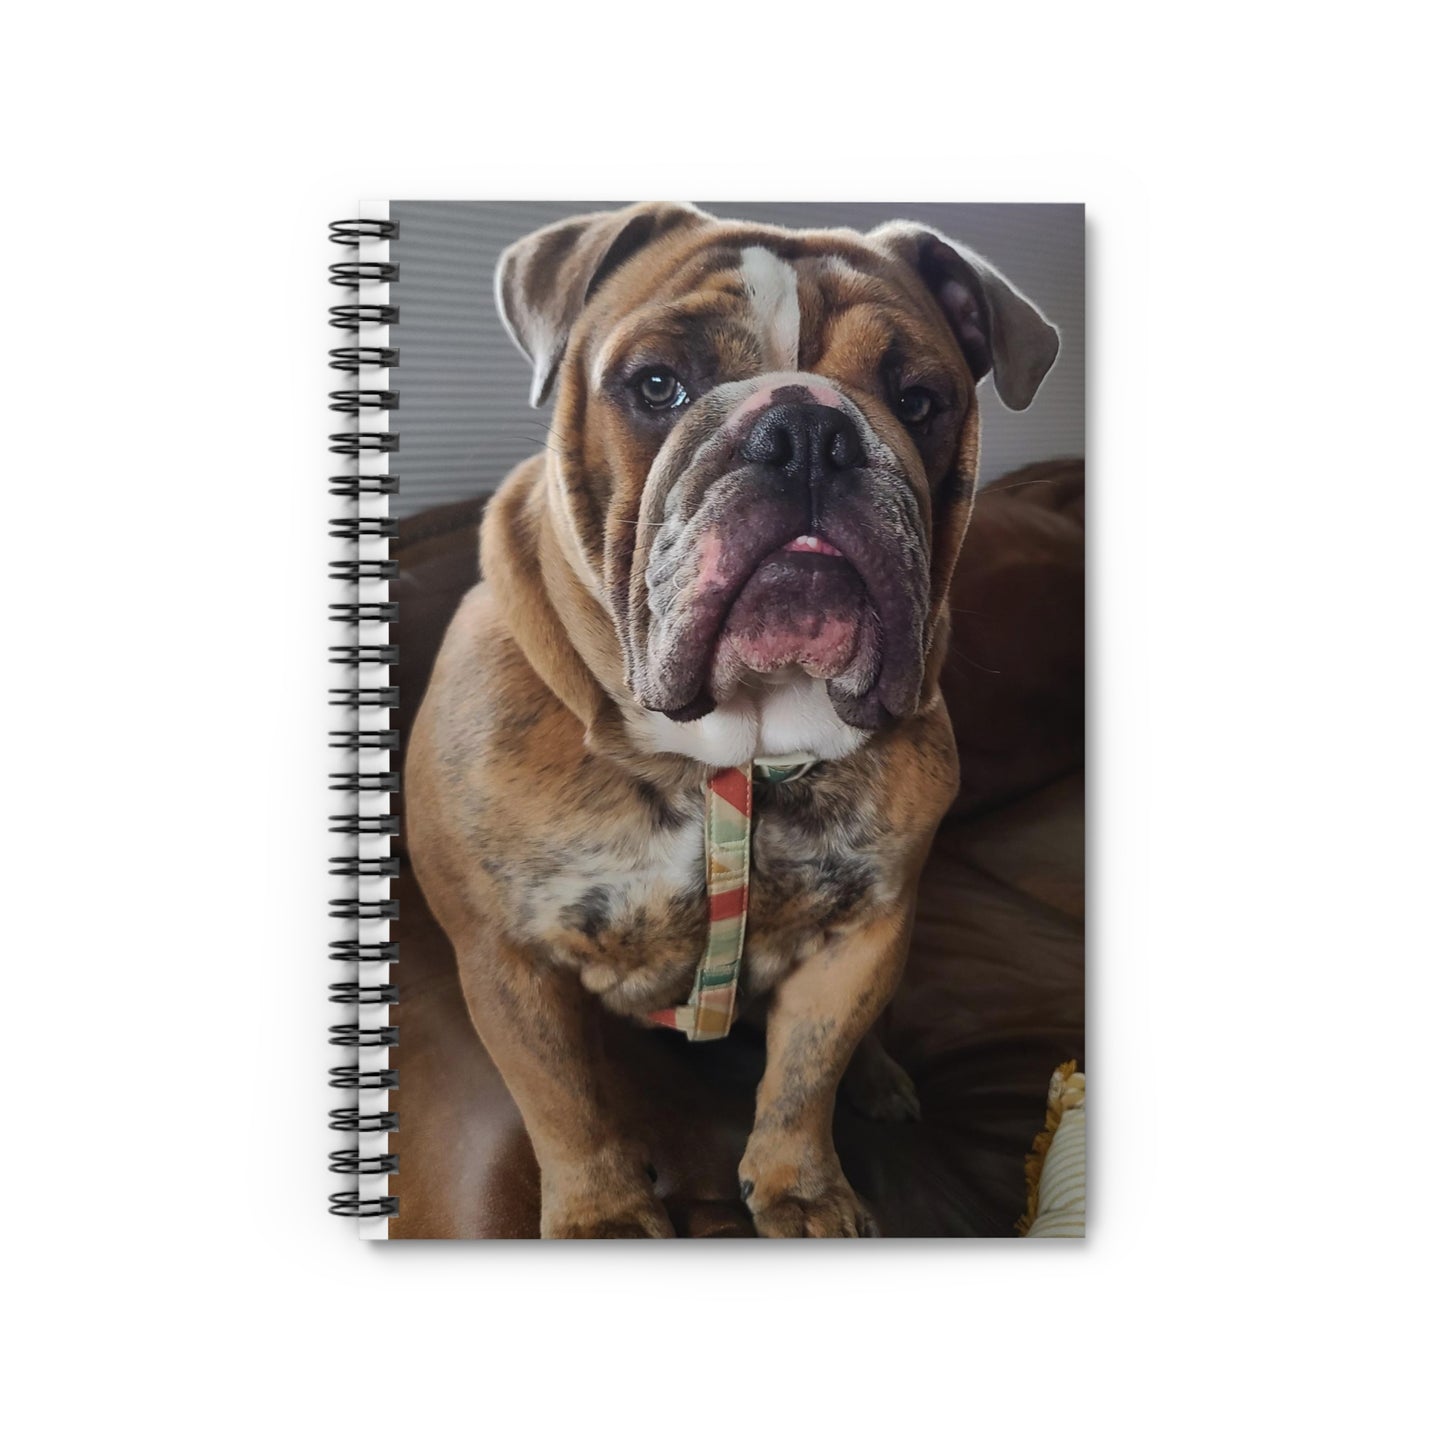 TOP DOG Spiral Notebook - Ruled Line